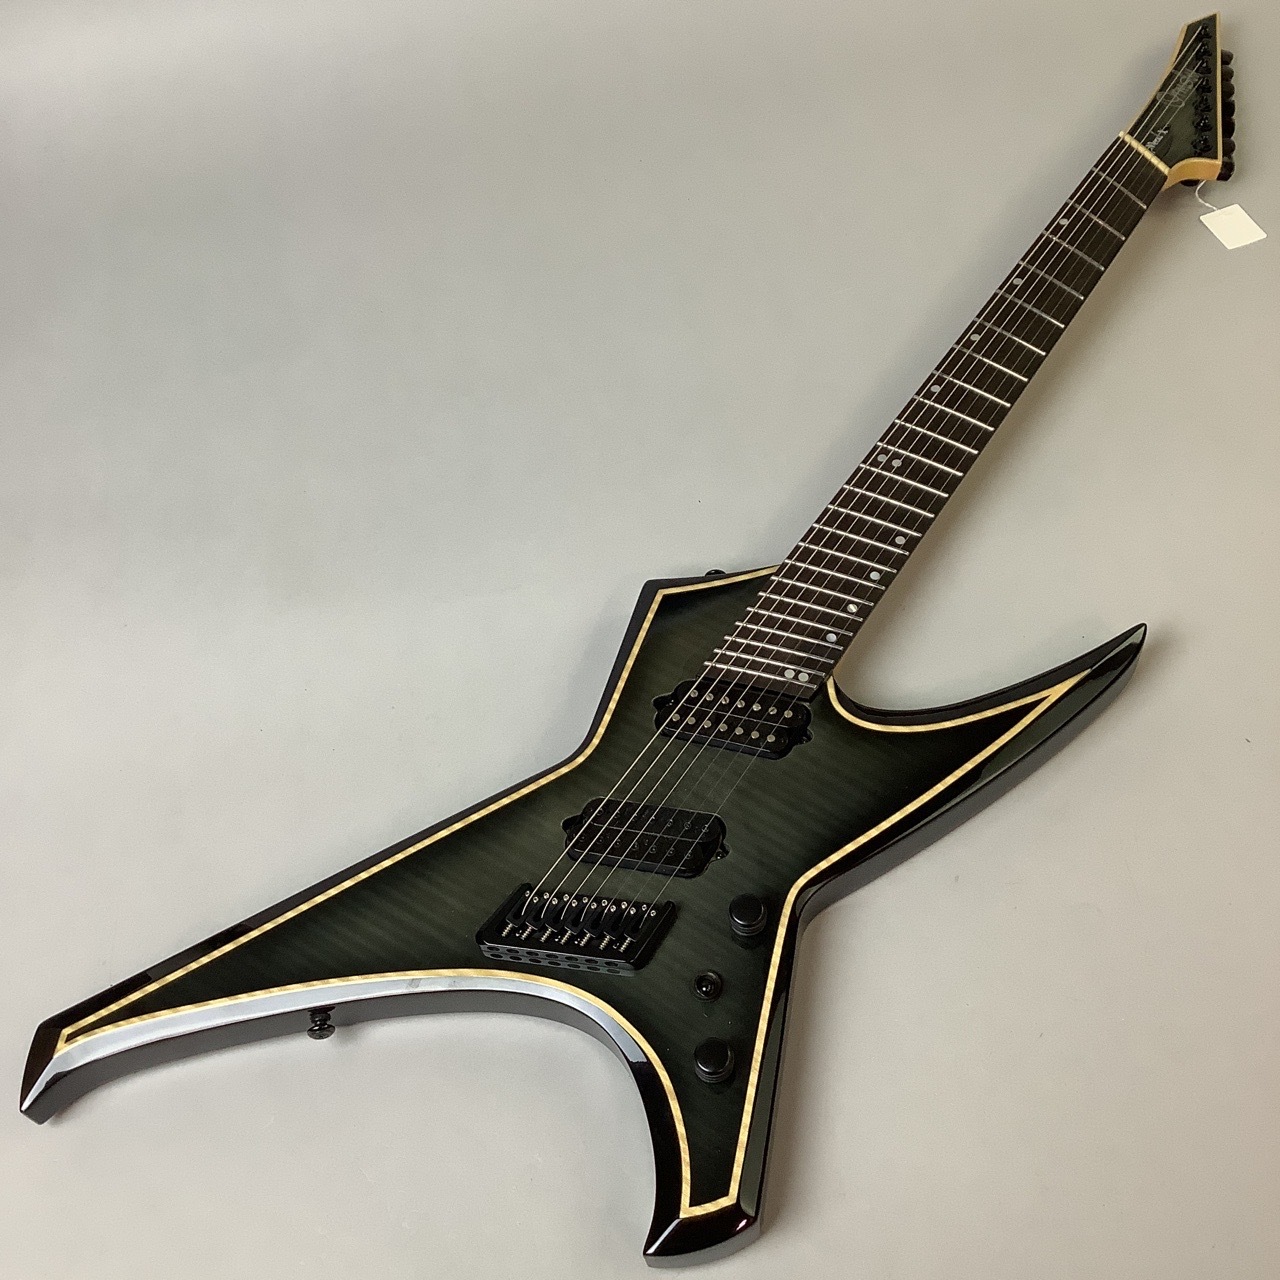 Ormsby Guitars METAL X G7 FMSA 【USED】エレクトリックギター変形タイプ【成田ボンベルタ店】